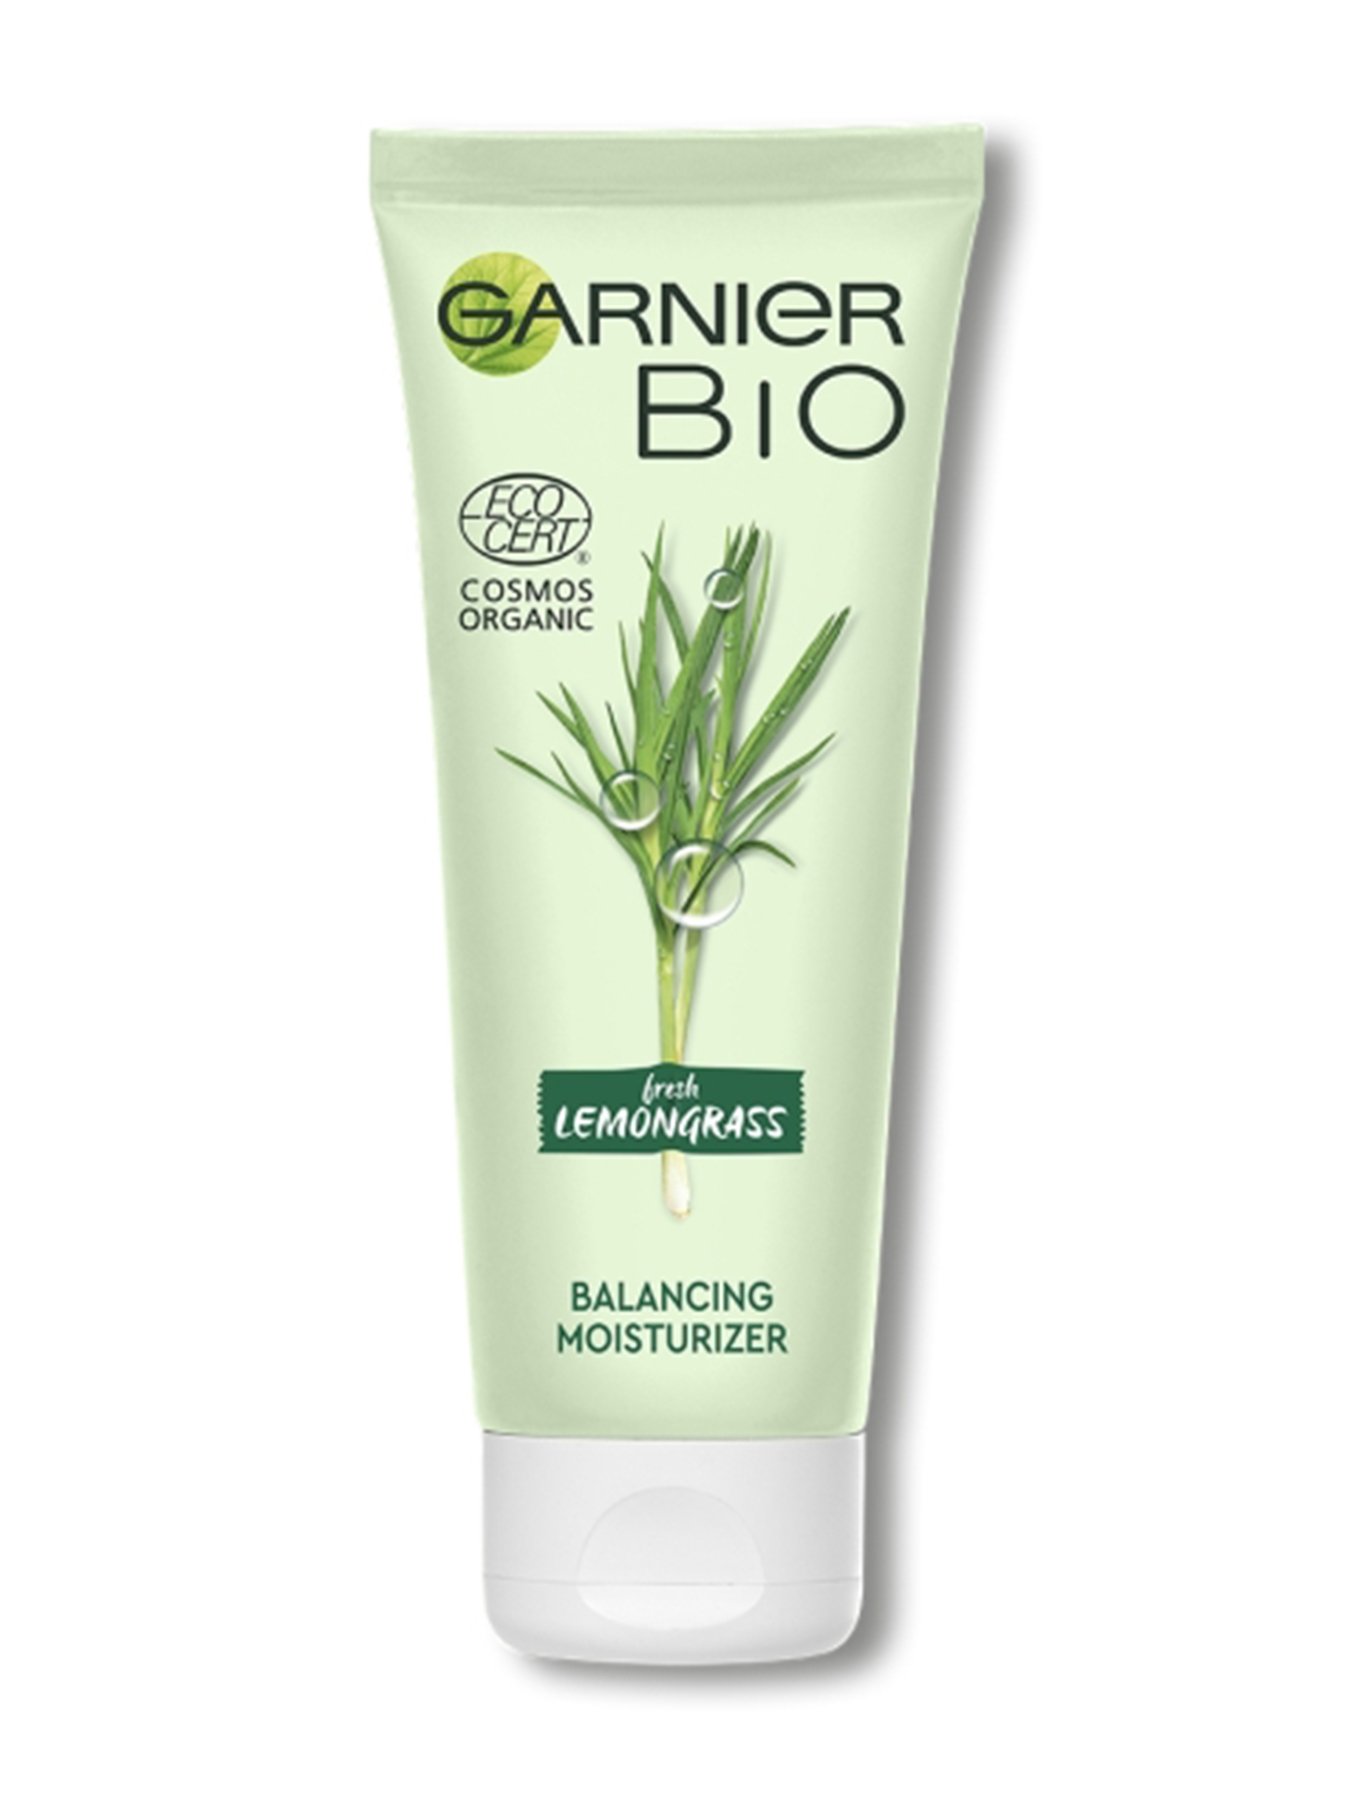 Garnier Bio Lemongrass hidratantna krema za ravnotežu kože